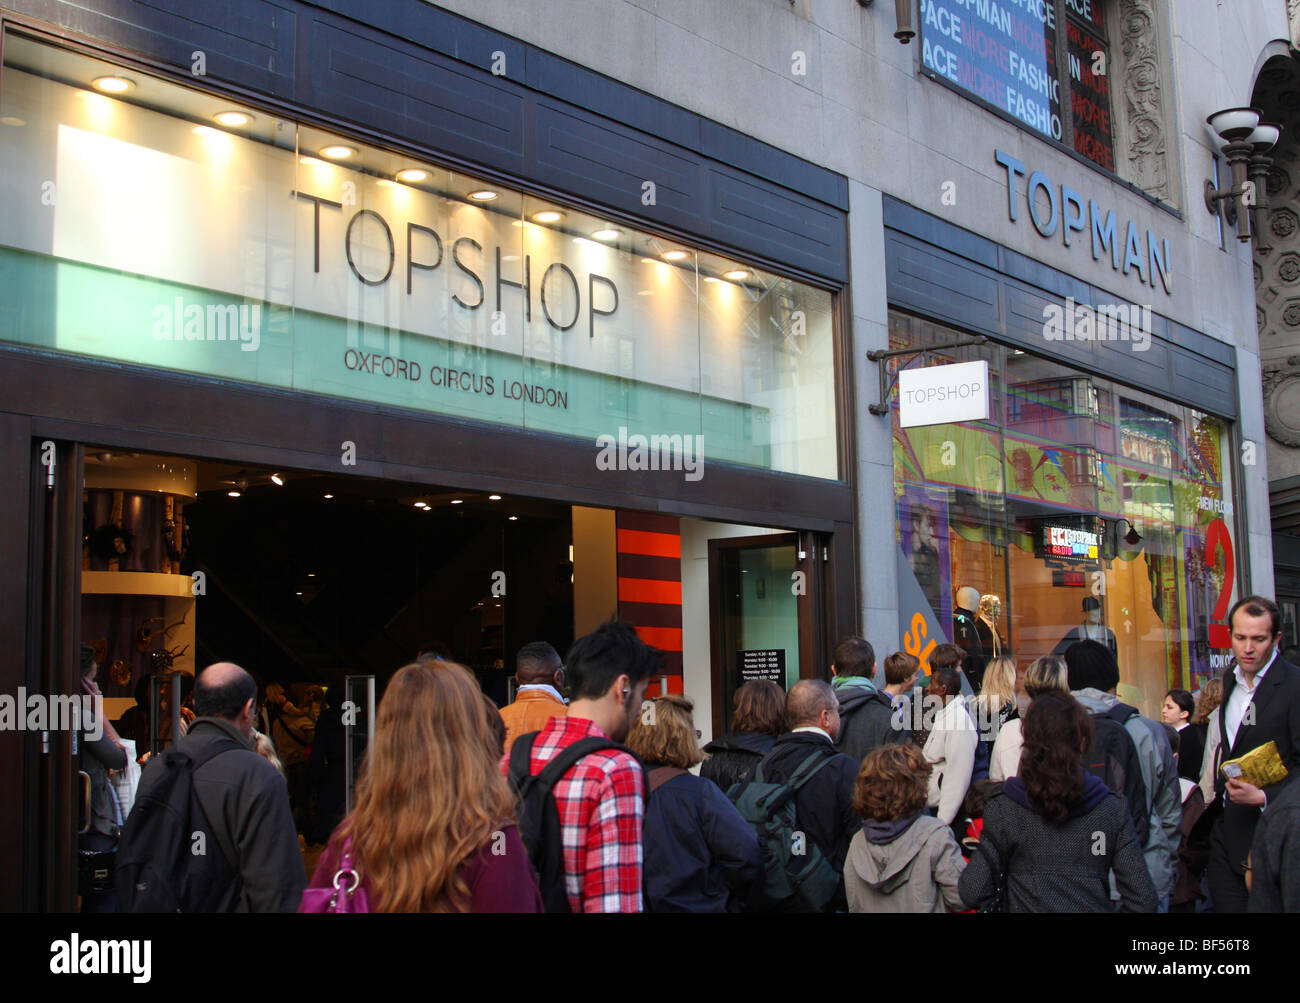 The Topshop retail fashion outlet, Oxford Street, London, England, U.K  Stock Photo - Alamy